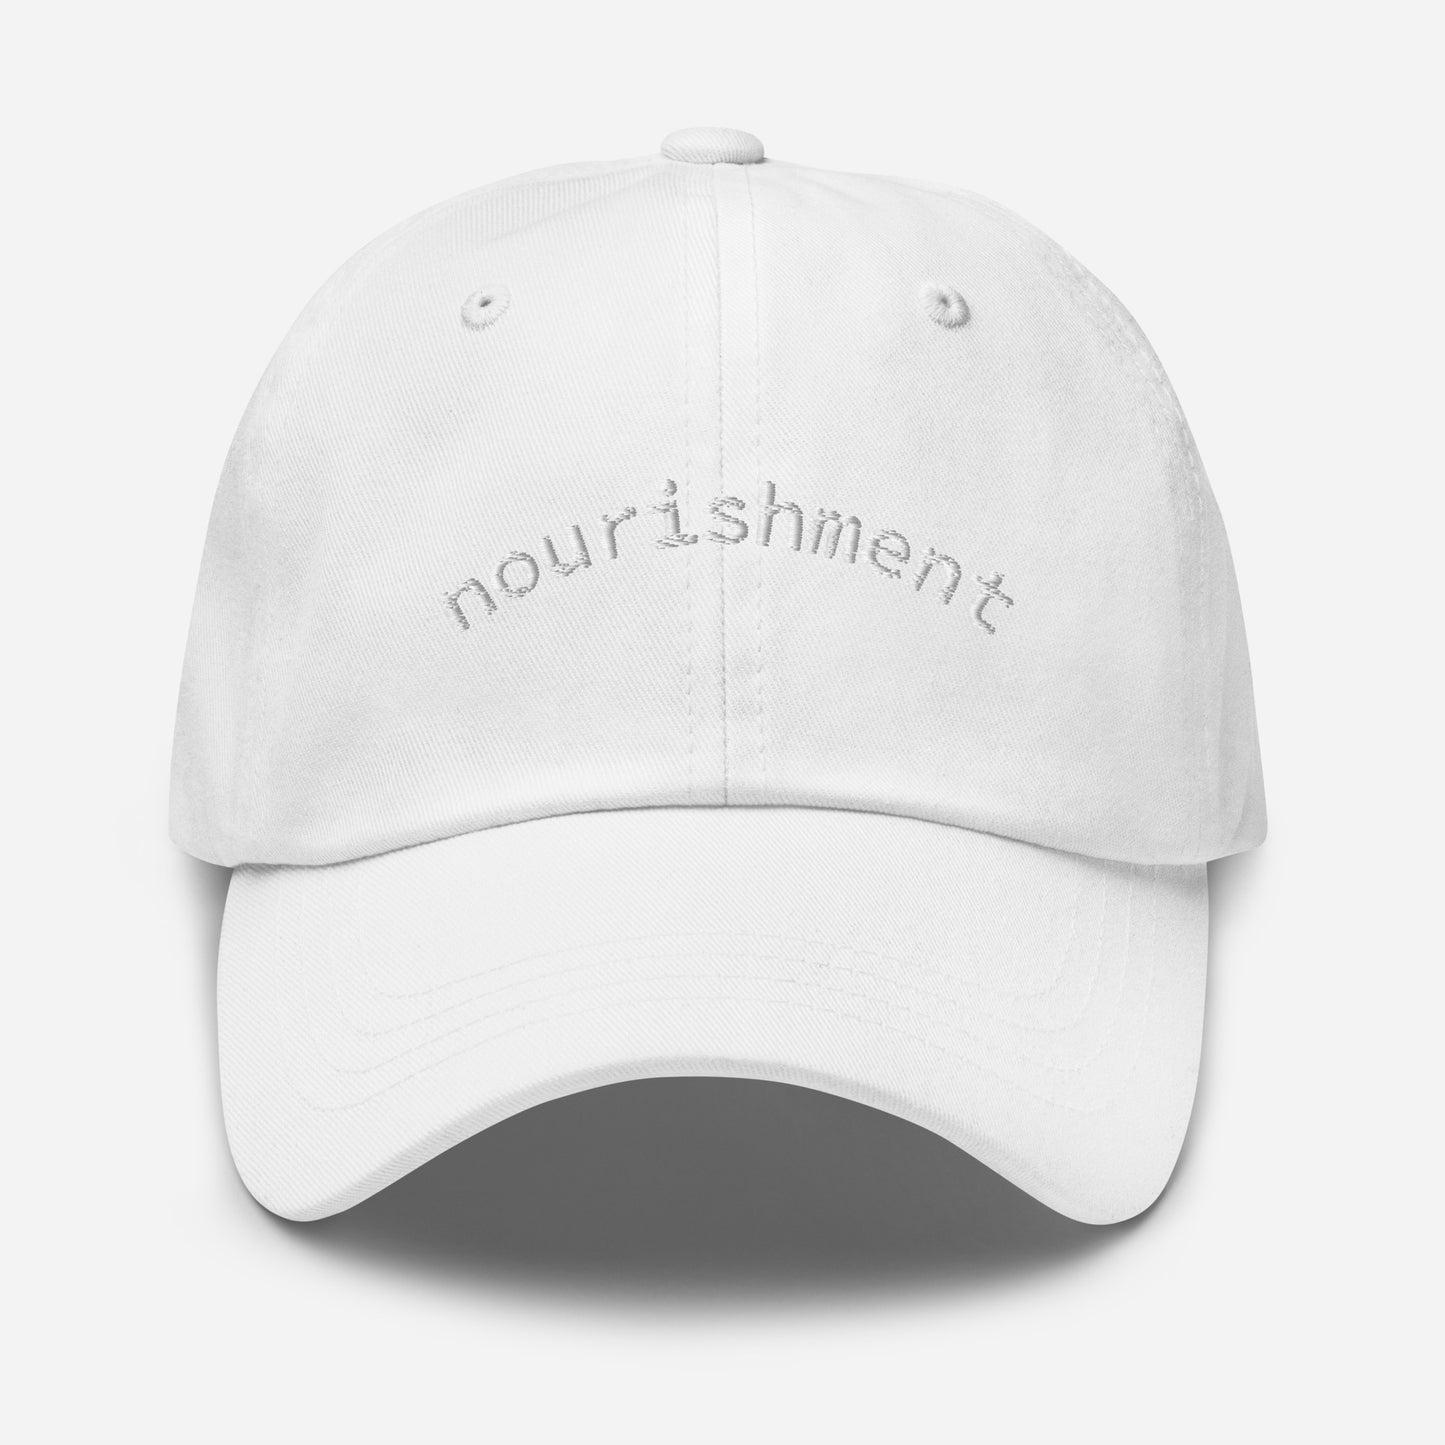 Nourishment Hat